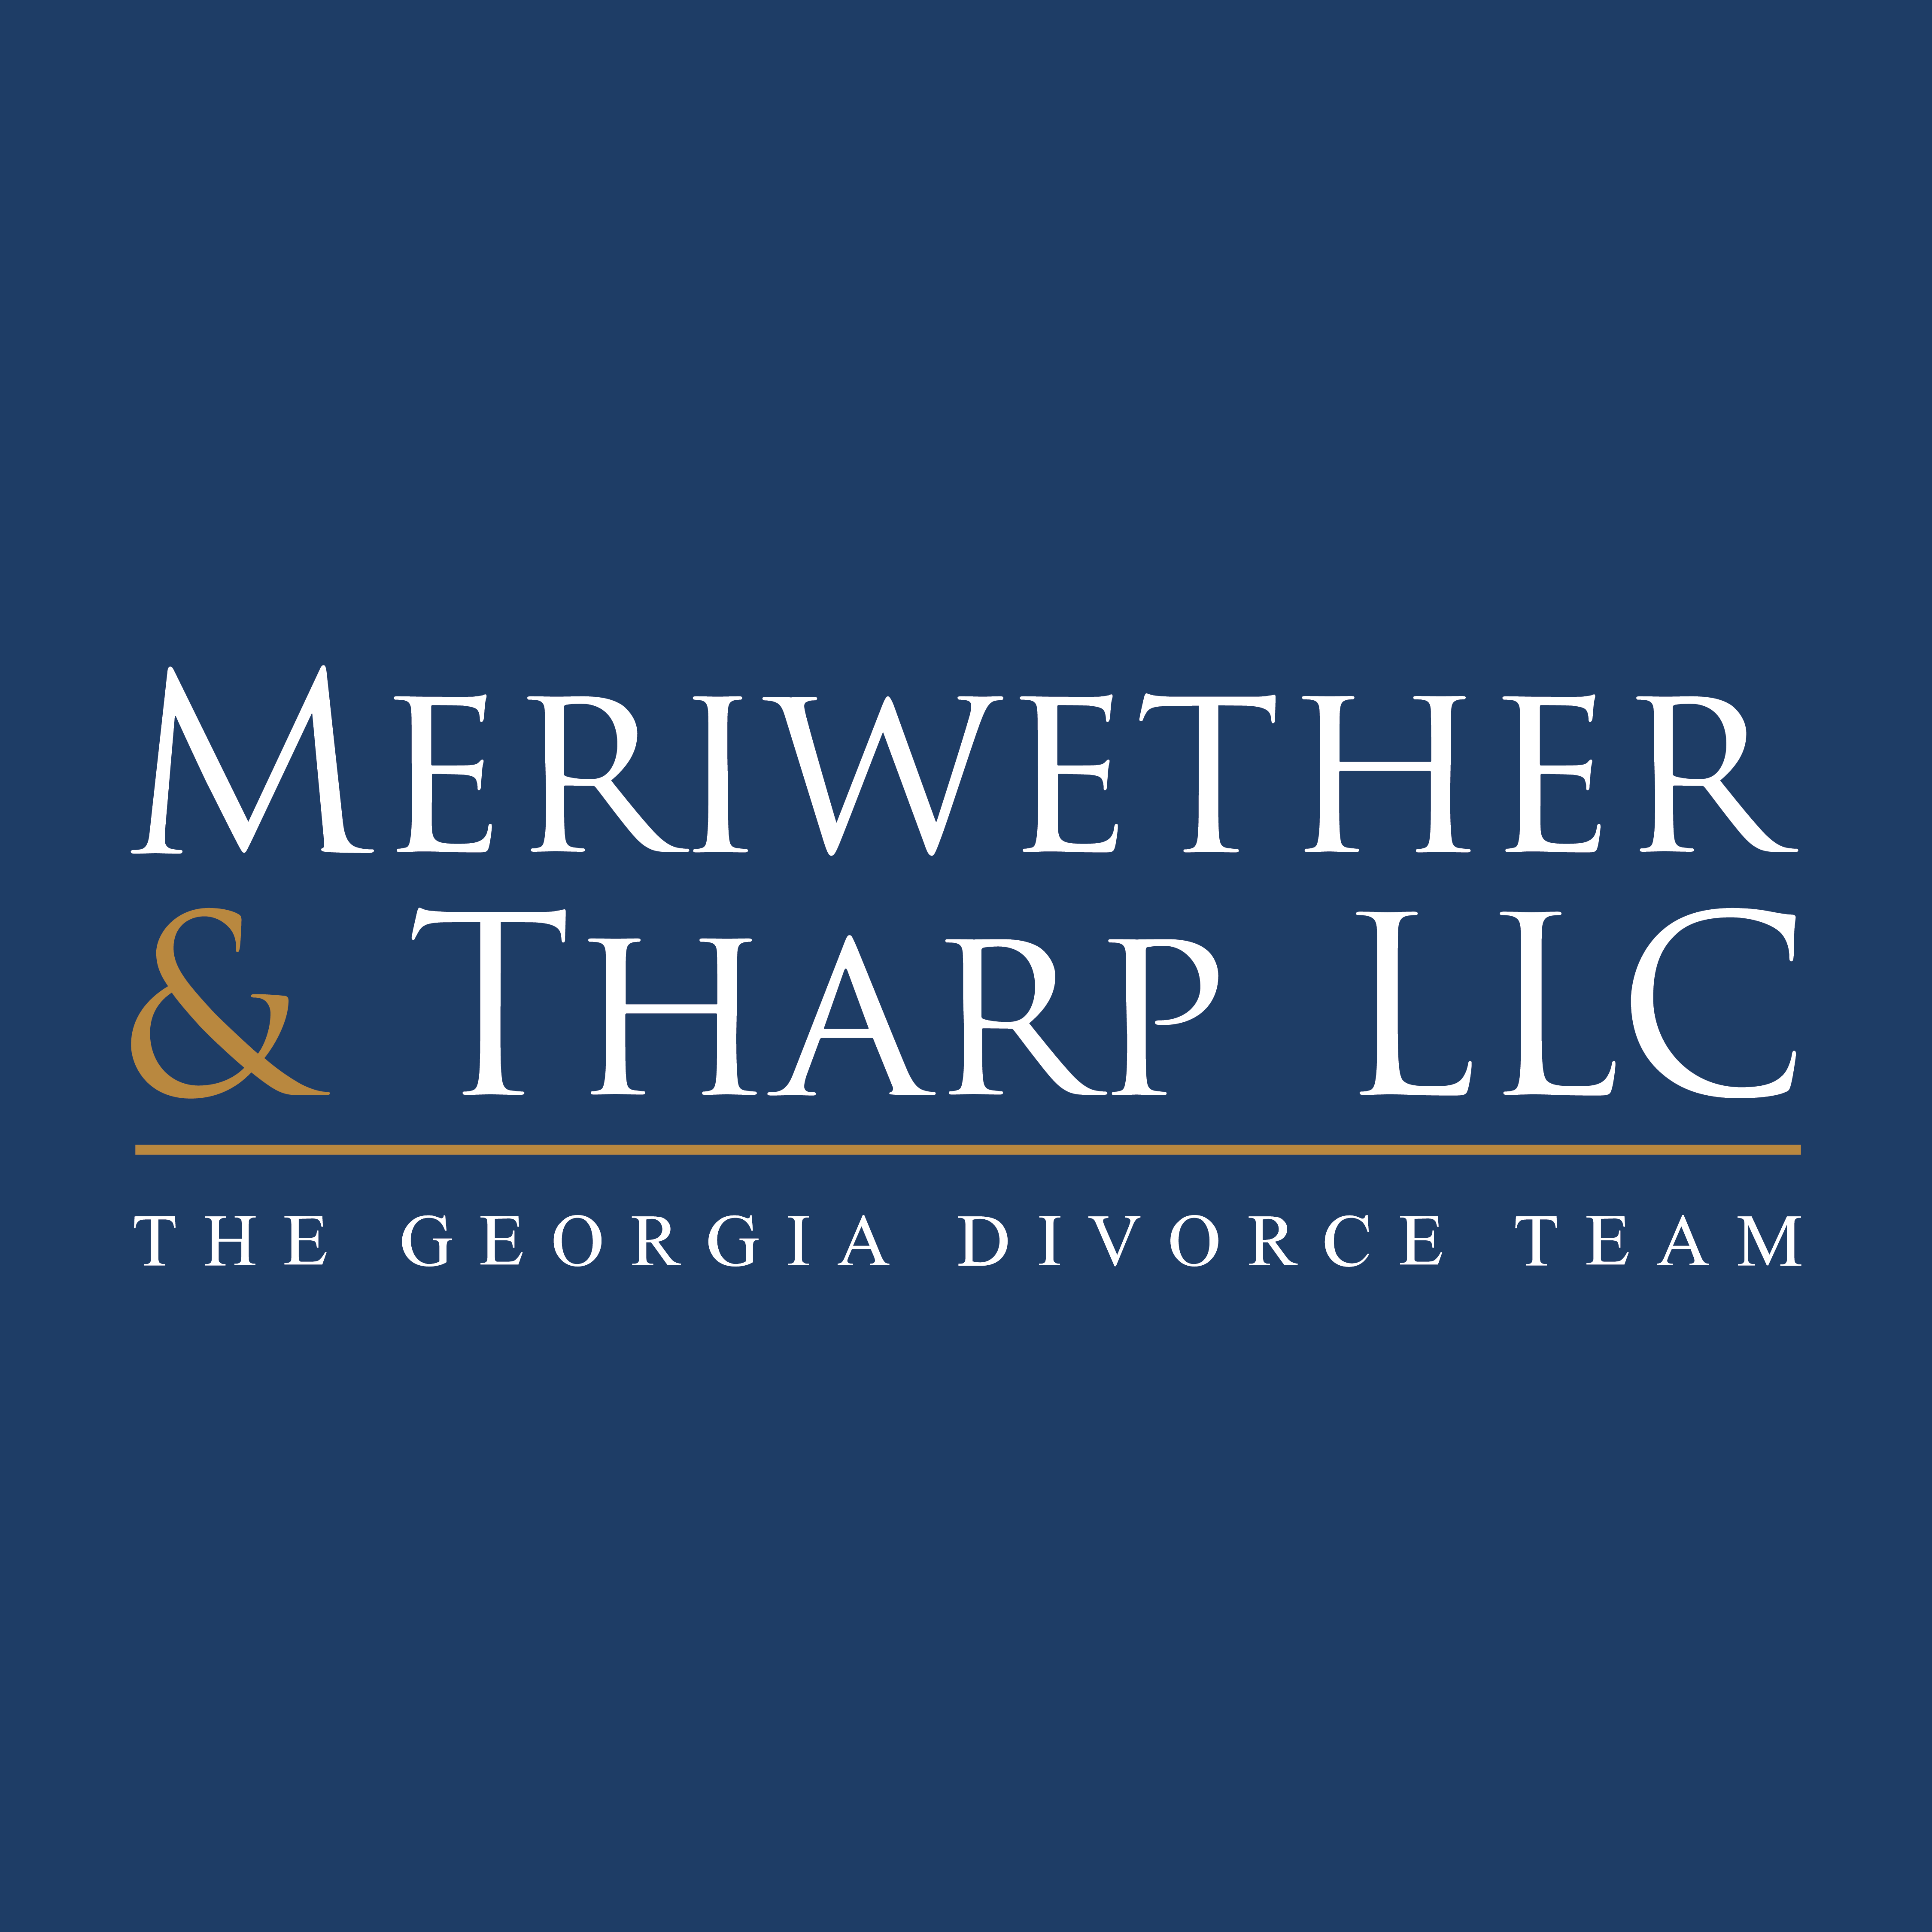 Meriwether & Tharp, LLC law firm logo